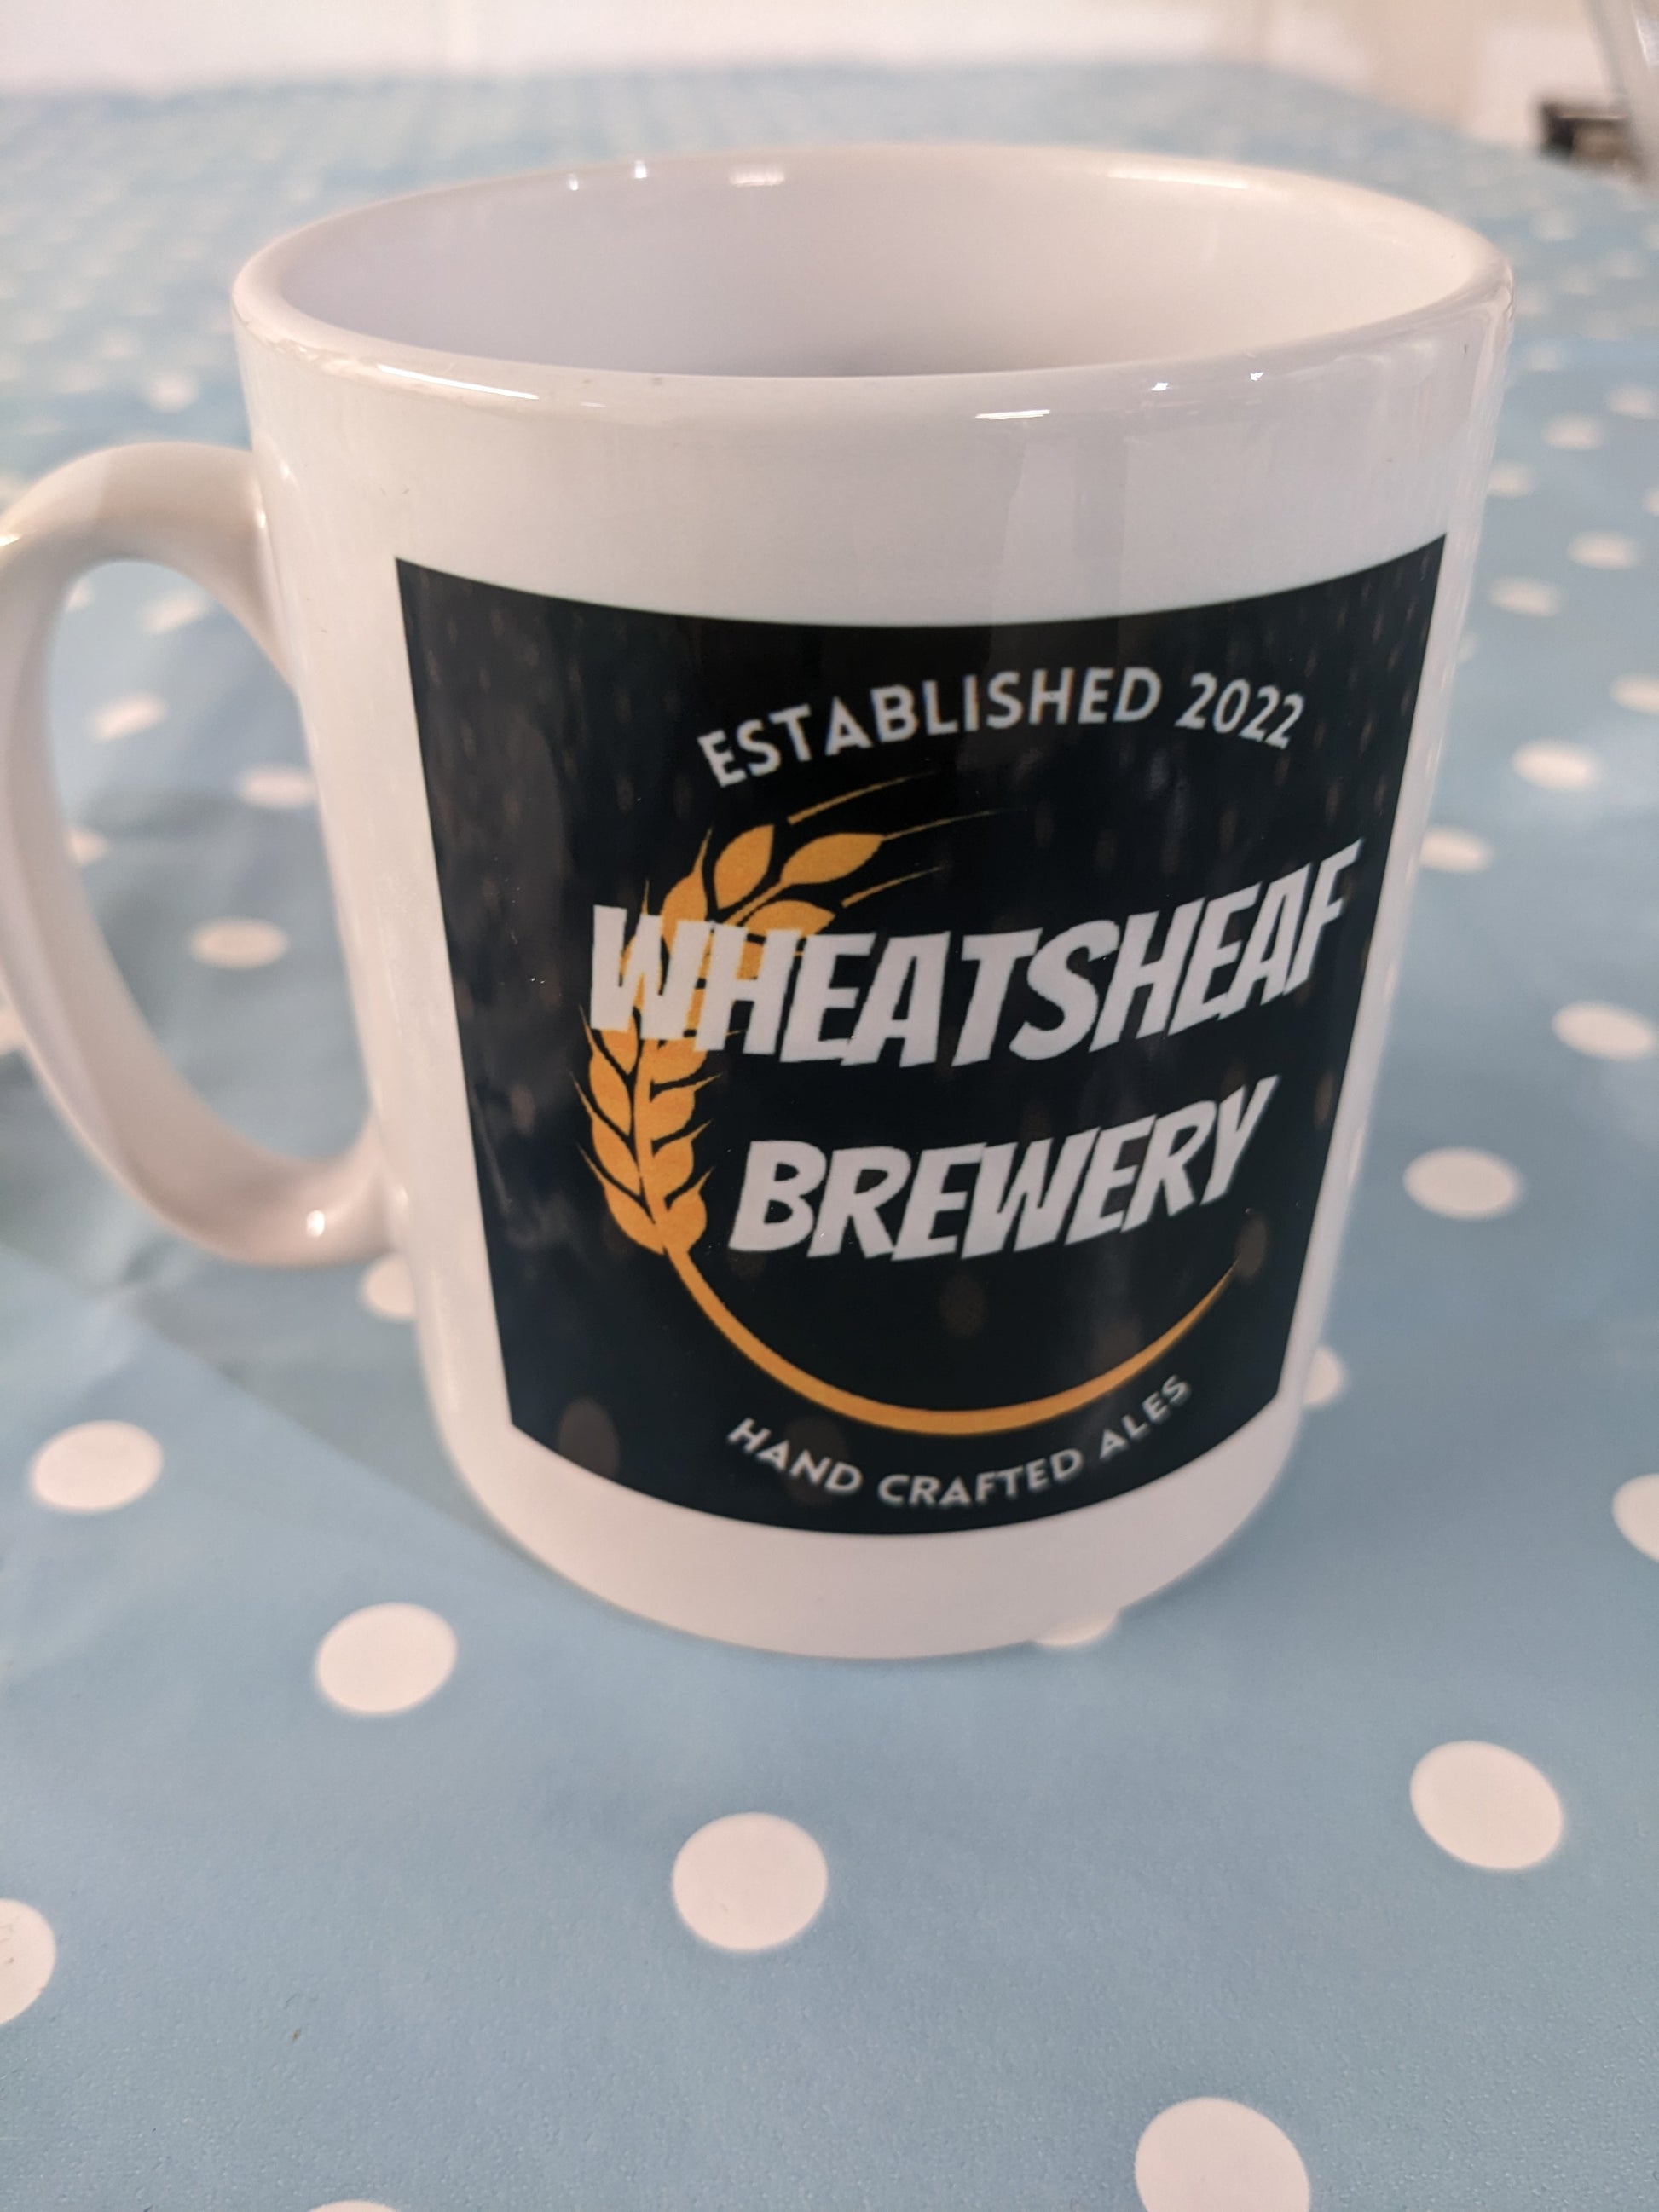 Photo of Wheatsheaf Brewery mug showing Wheatsheaf Brewery logo on a white coffee or tea mug